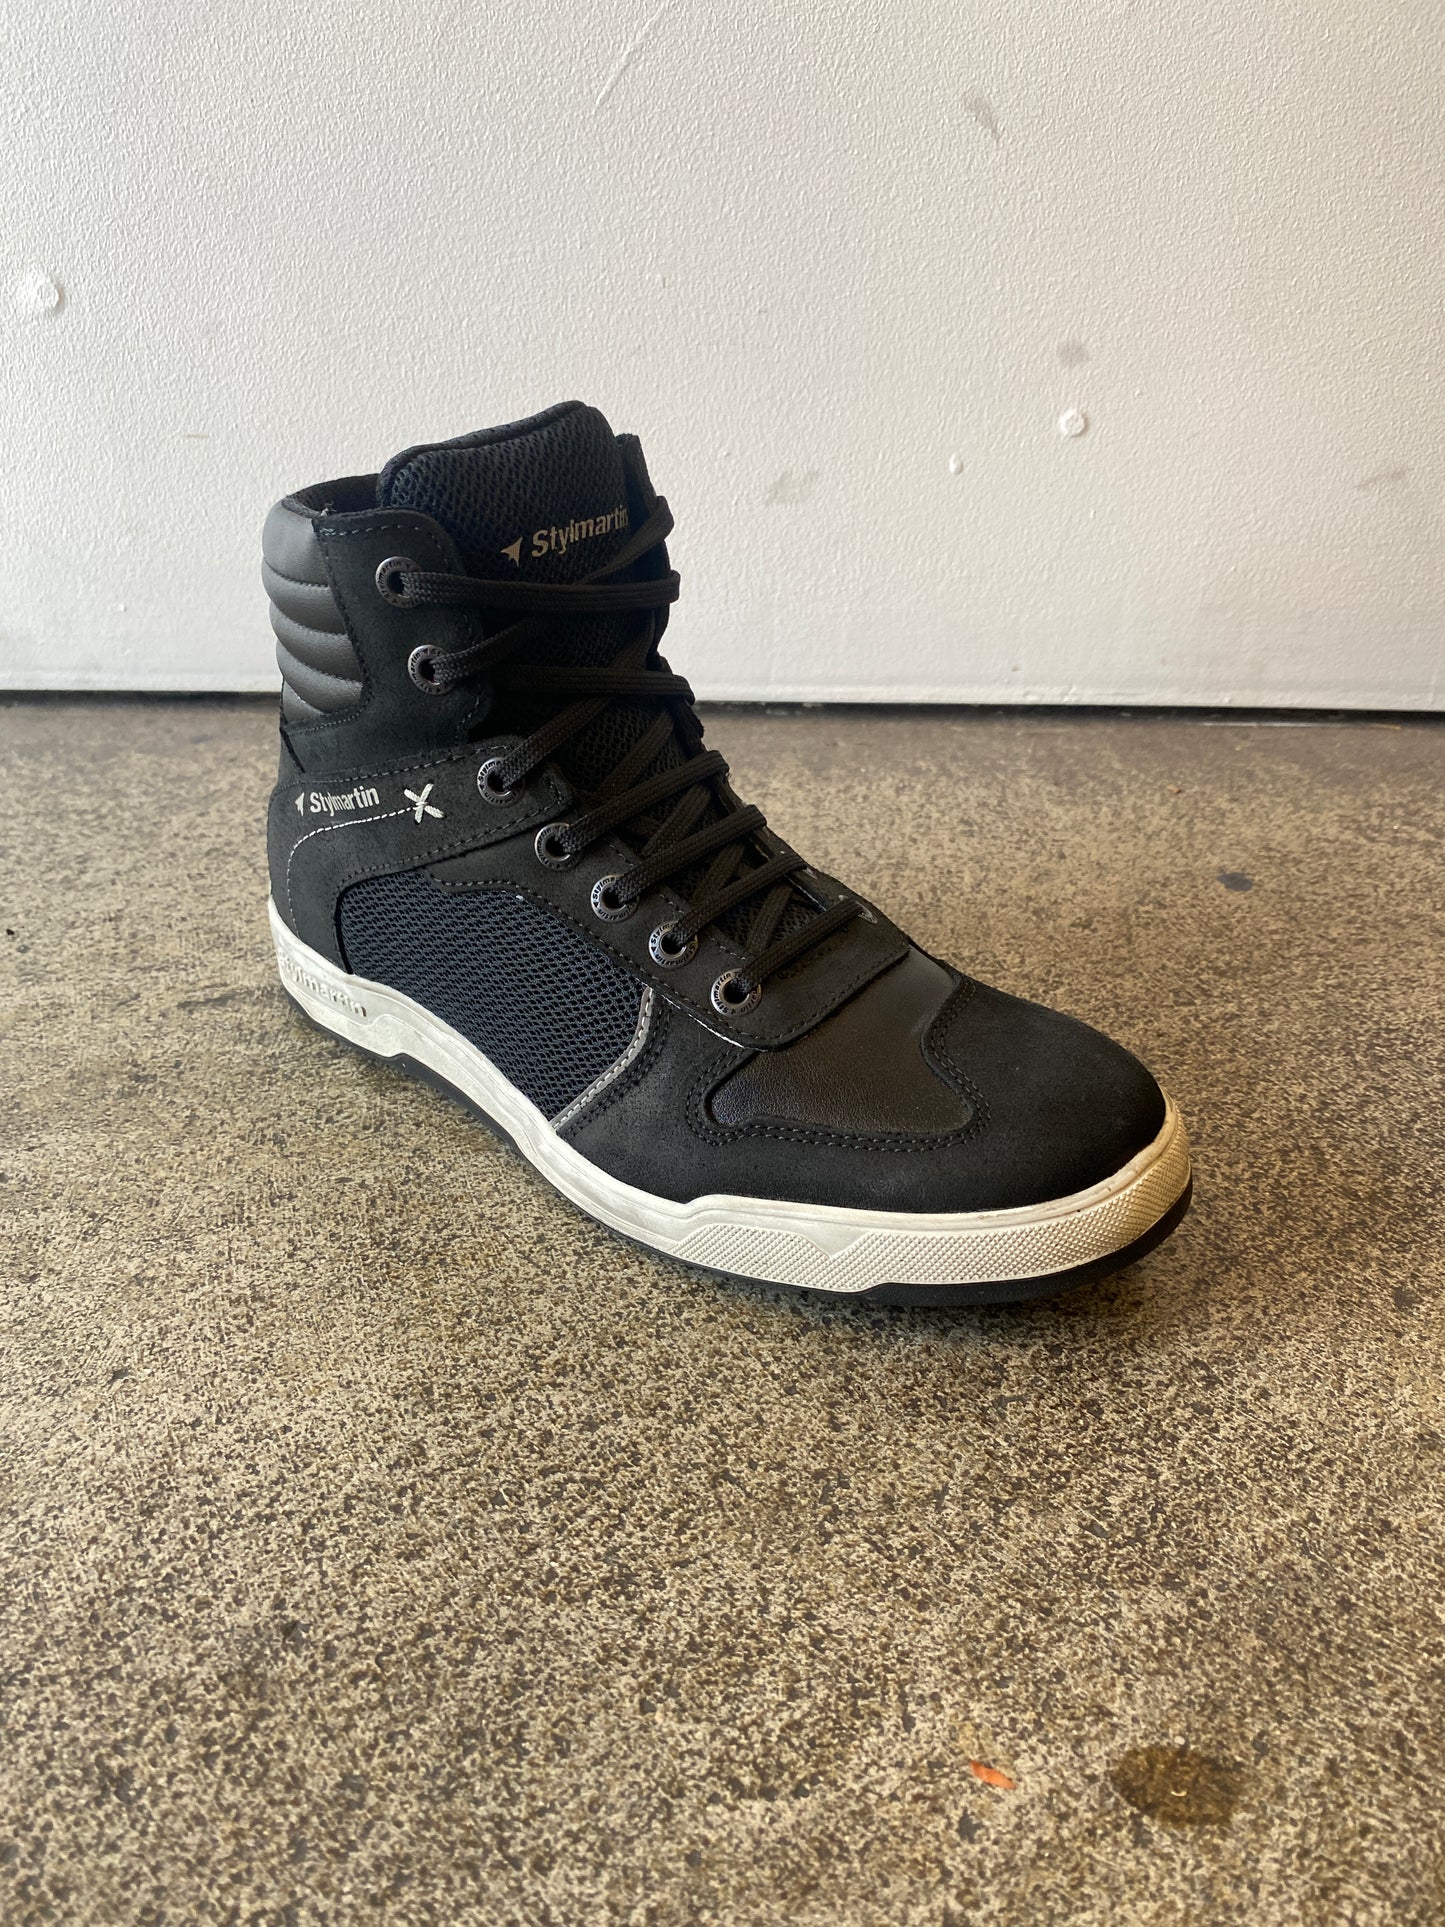 STYLMARTIN Atom Sneaker - Nero/Black